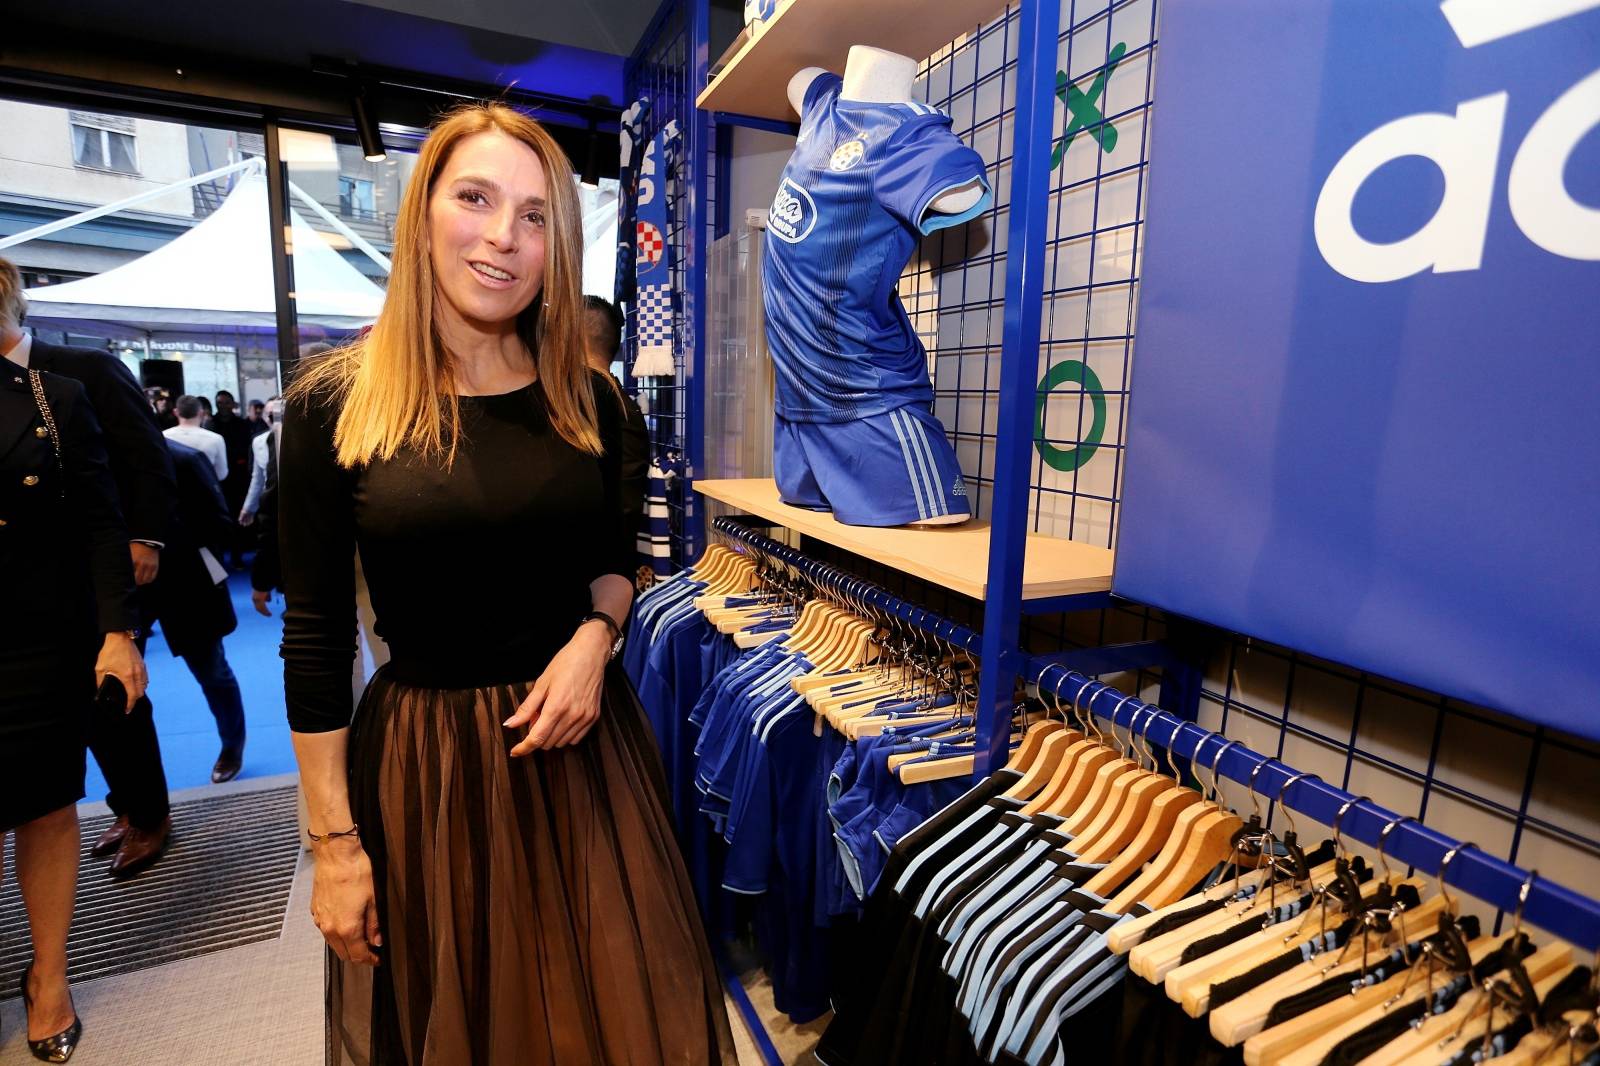 Zagreb: Otvoren novi Dinamov Fan shop